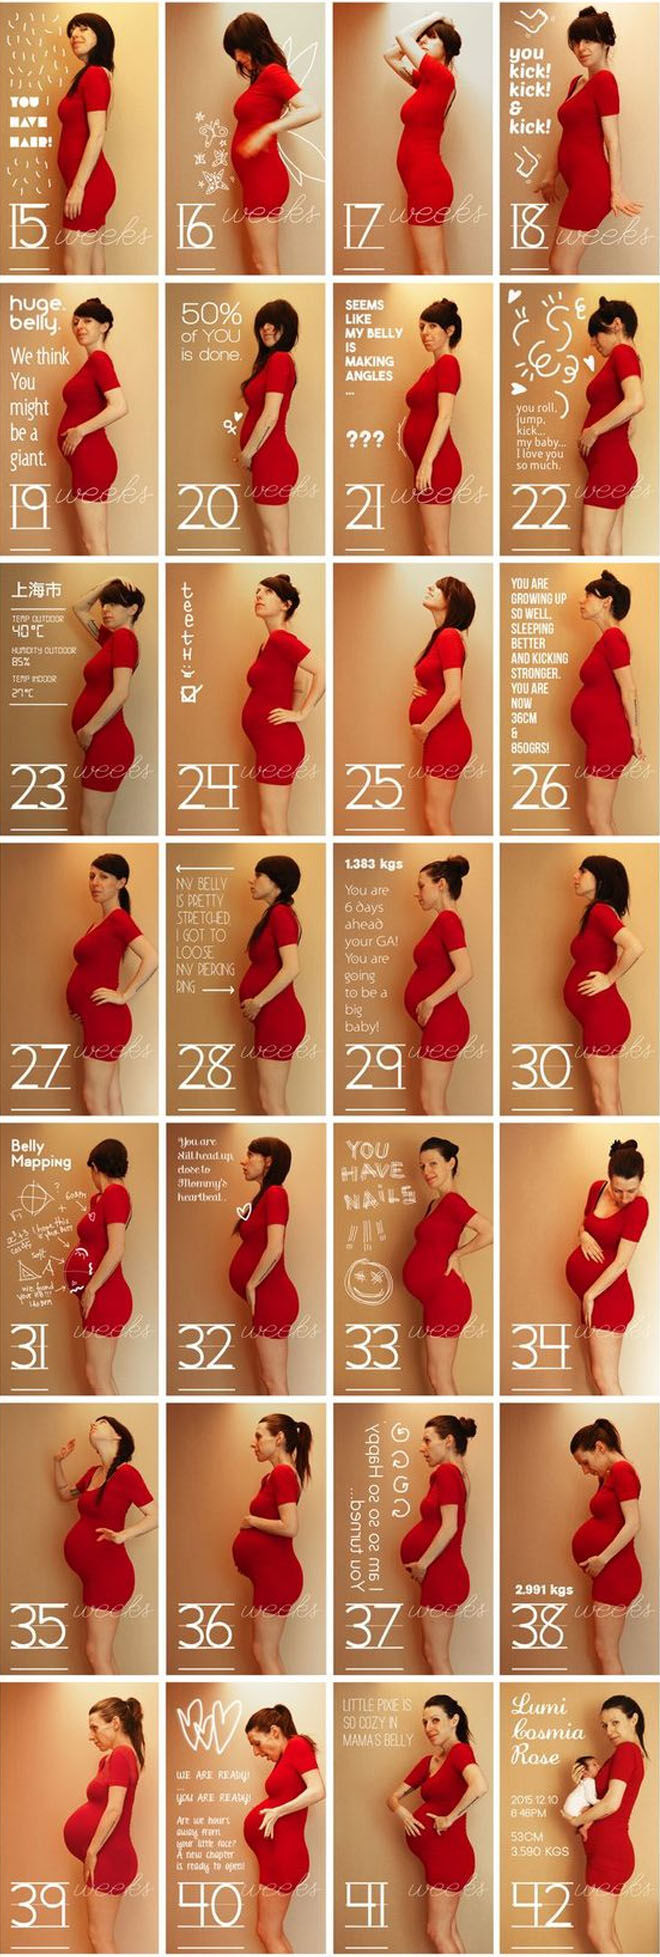 14 pregnancy week by week photo ideas: App for week by week pregnancy photos